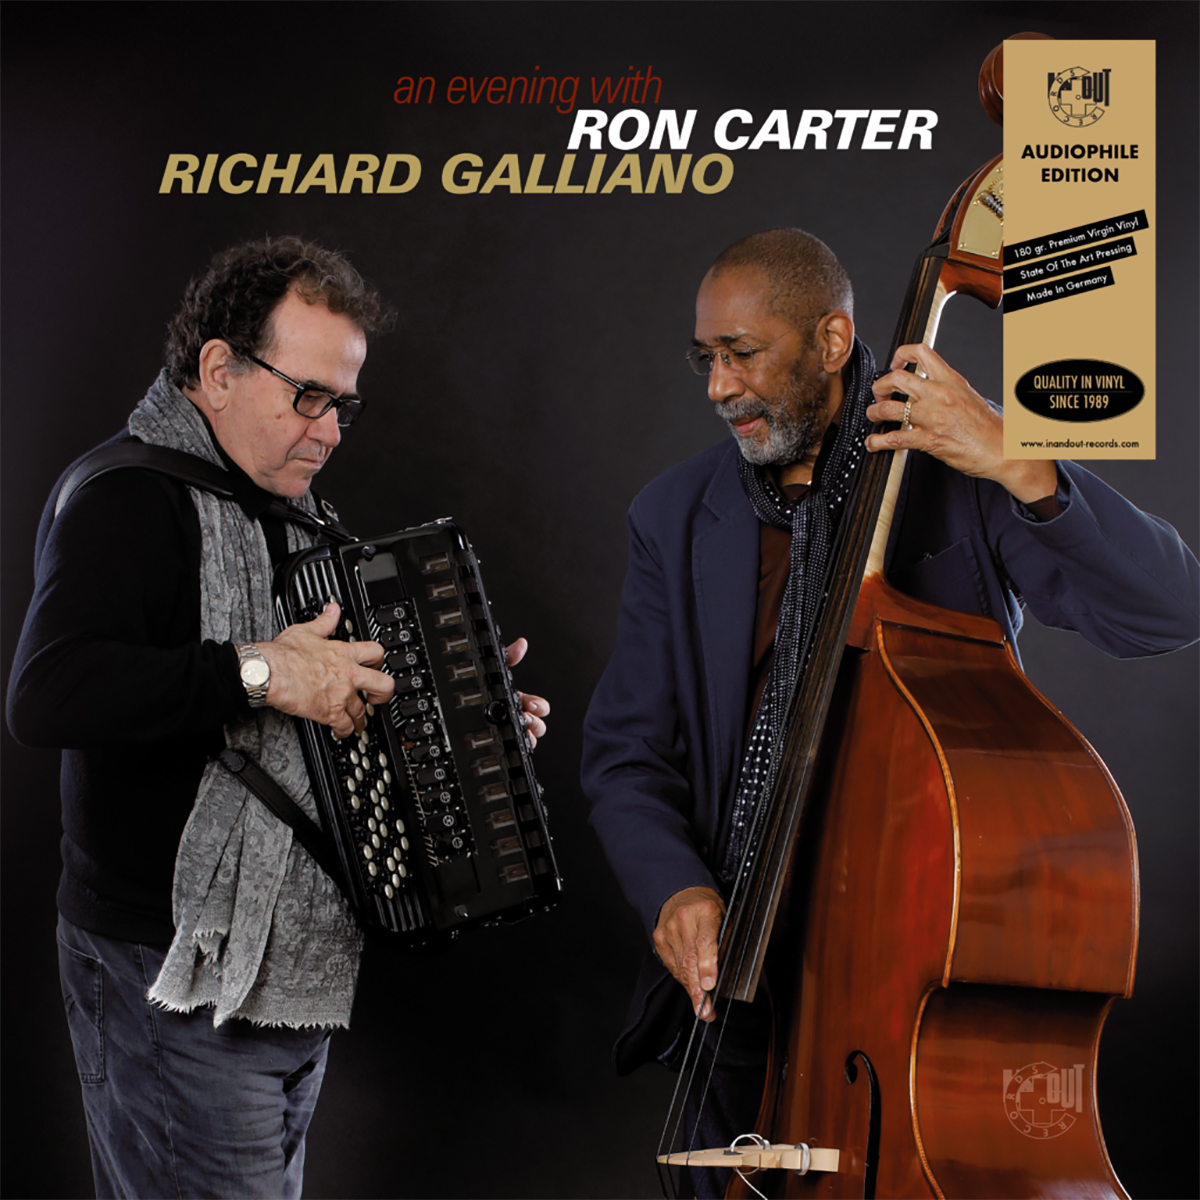 Ron Carter and Richard Galliano